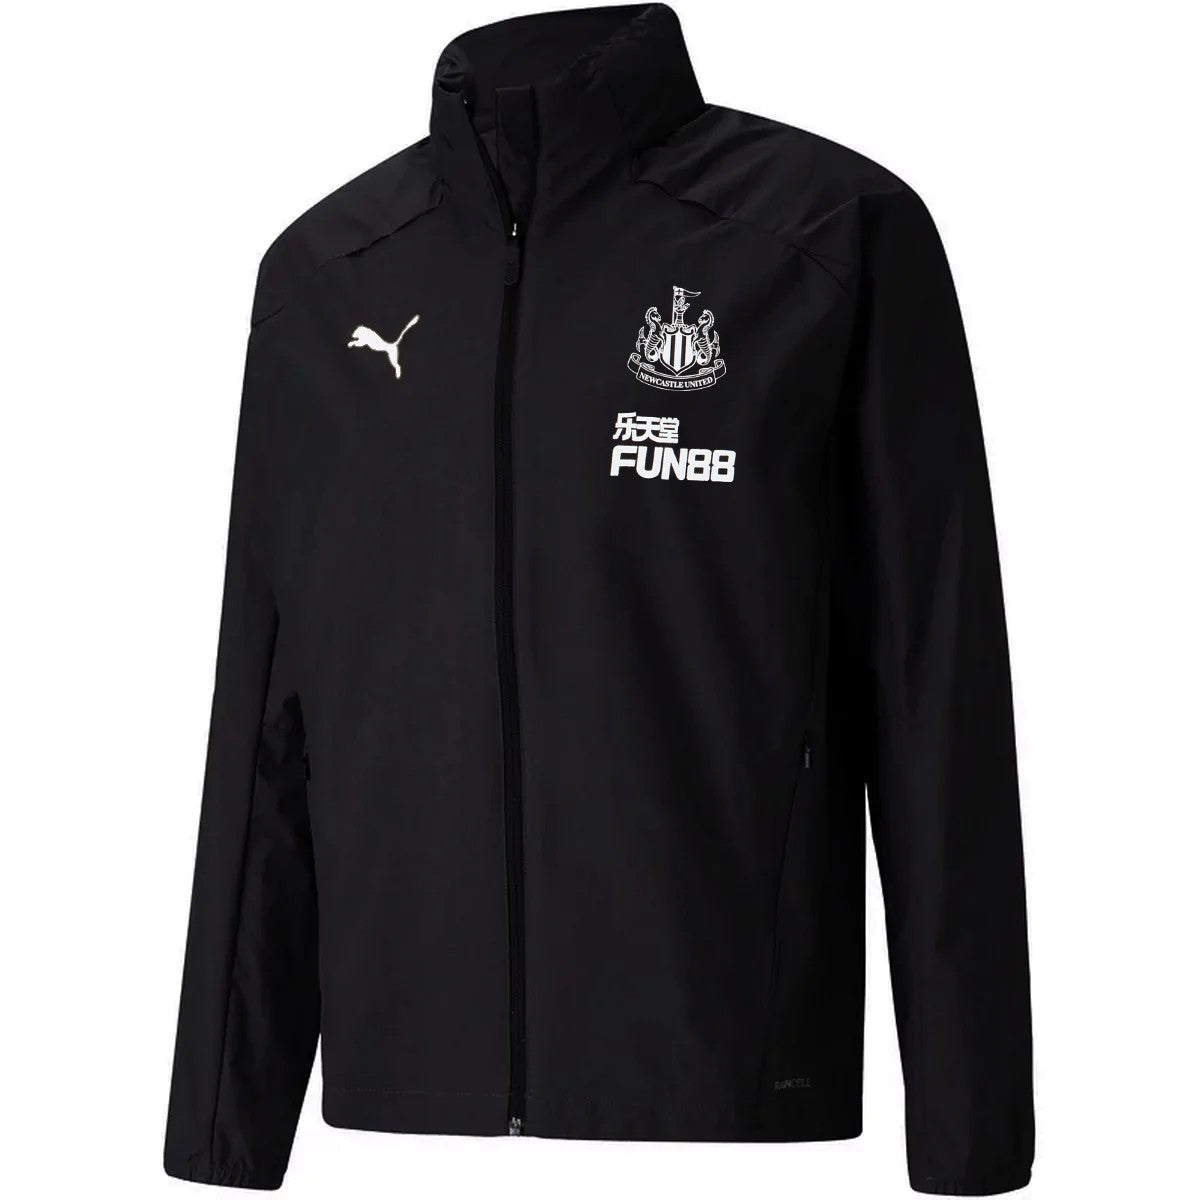 Newcastle United soccer training jacket 2020/21 - Puma SoccerTracksuits.com